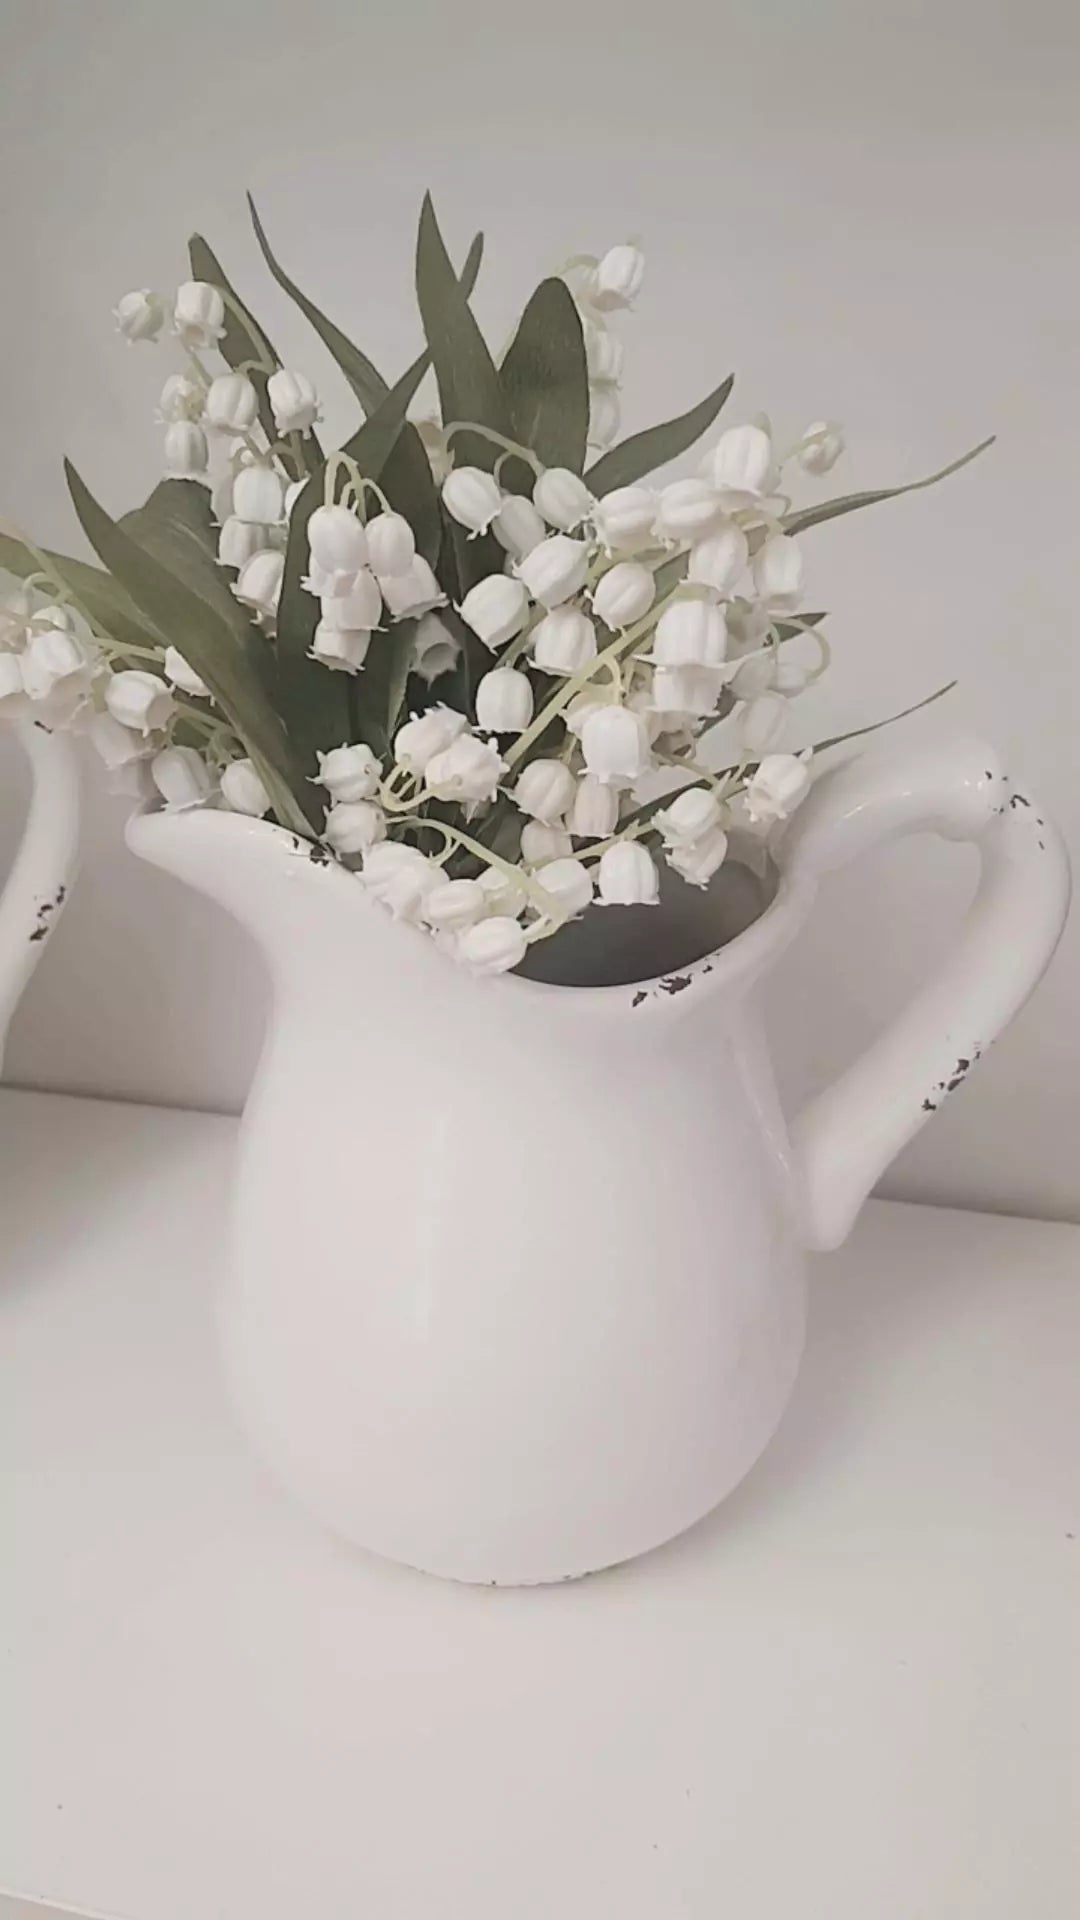 white ceramic pitcher